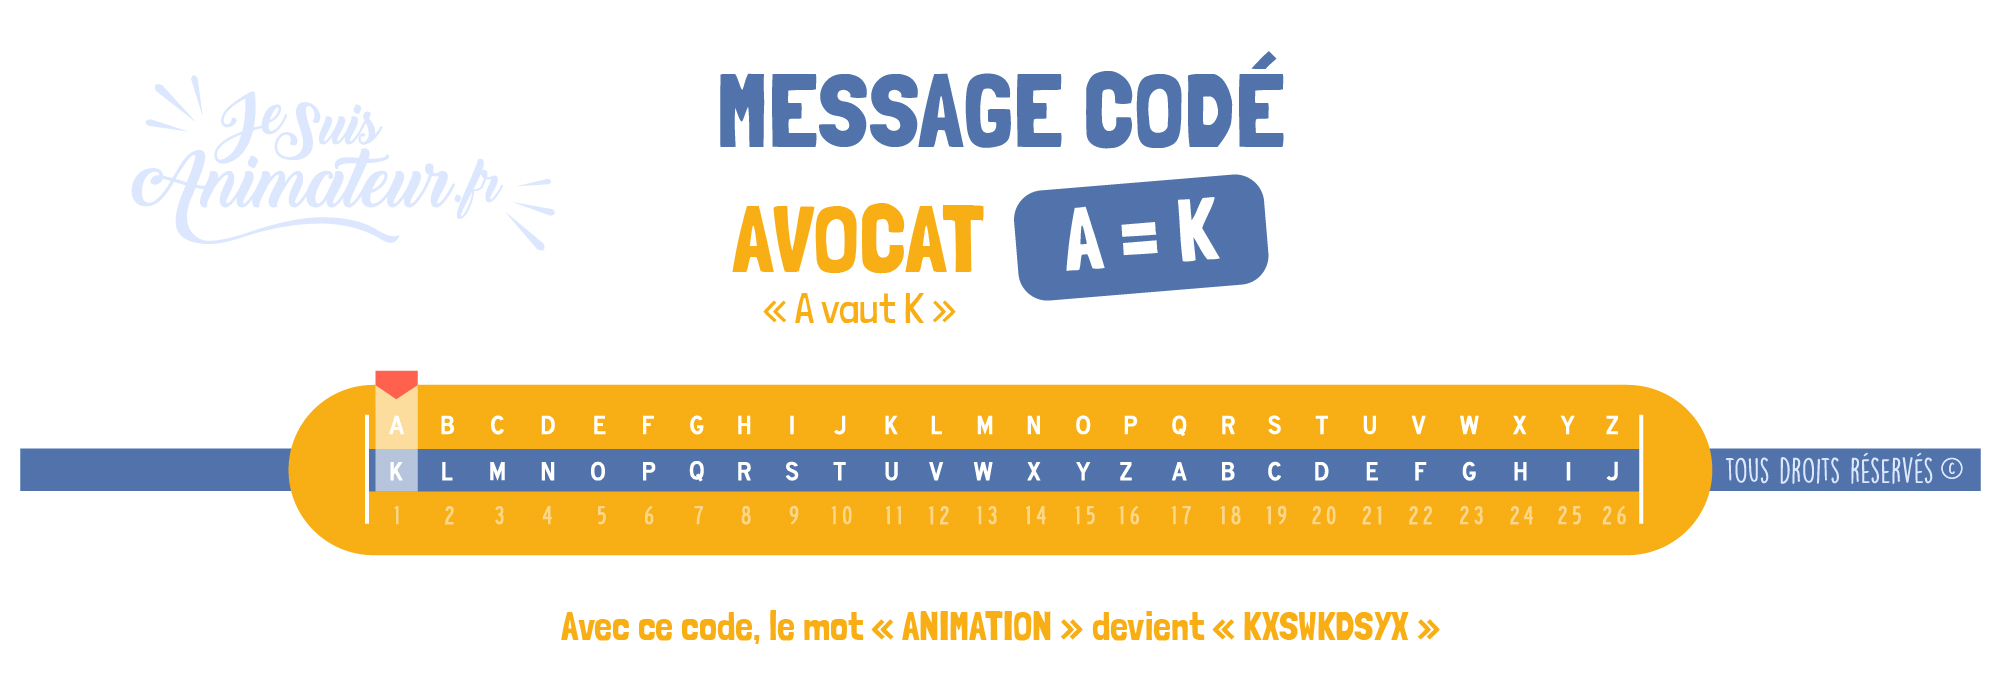 Message codé « Avocat - A vaut K » (A = K)